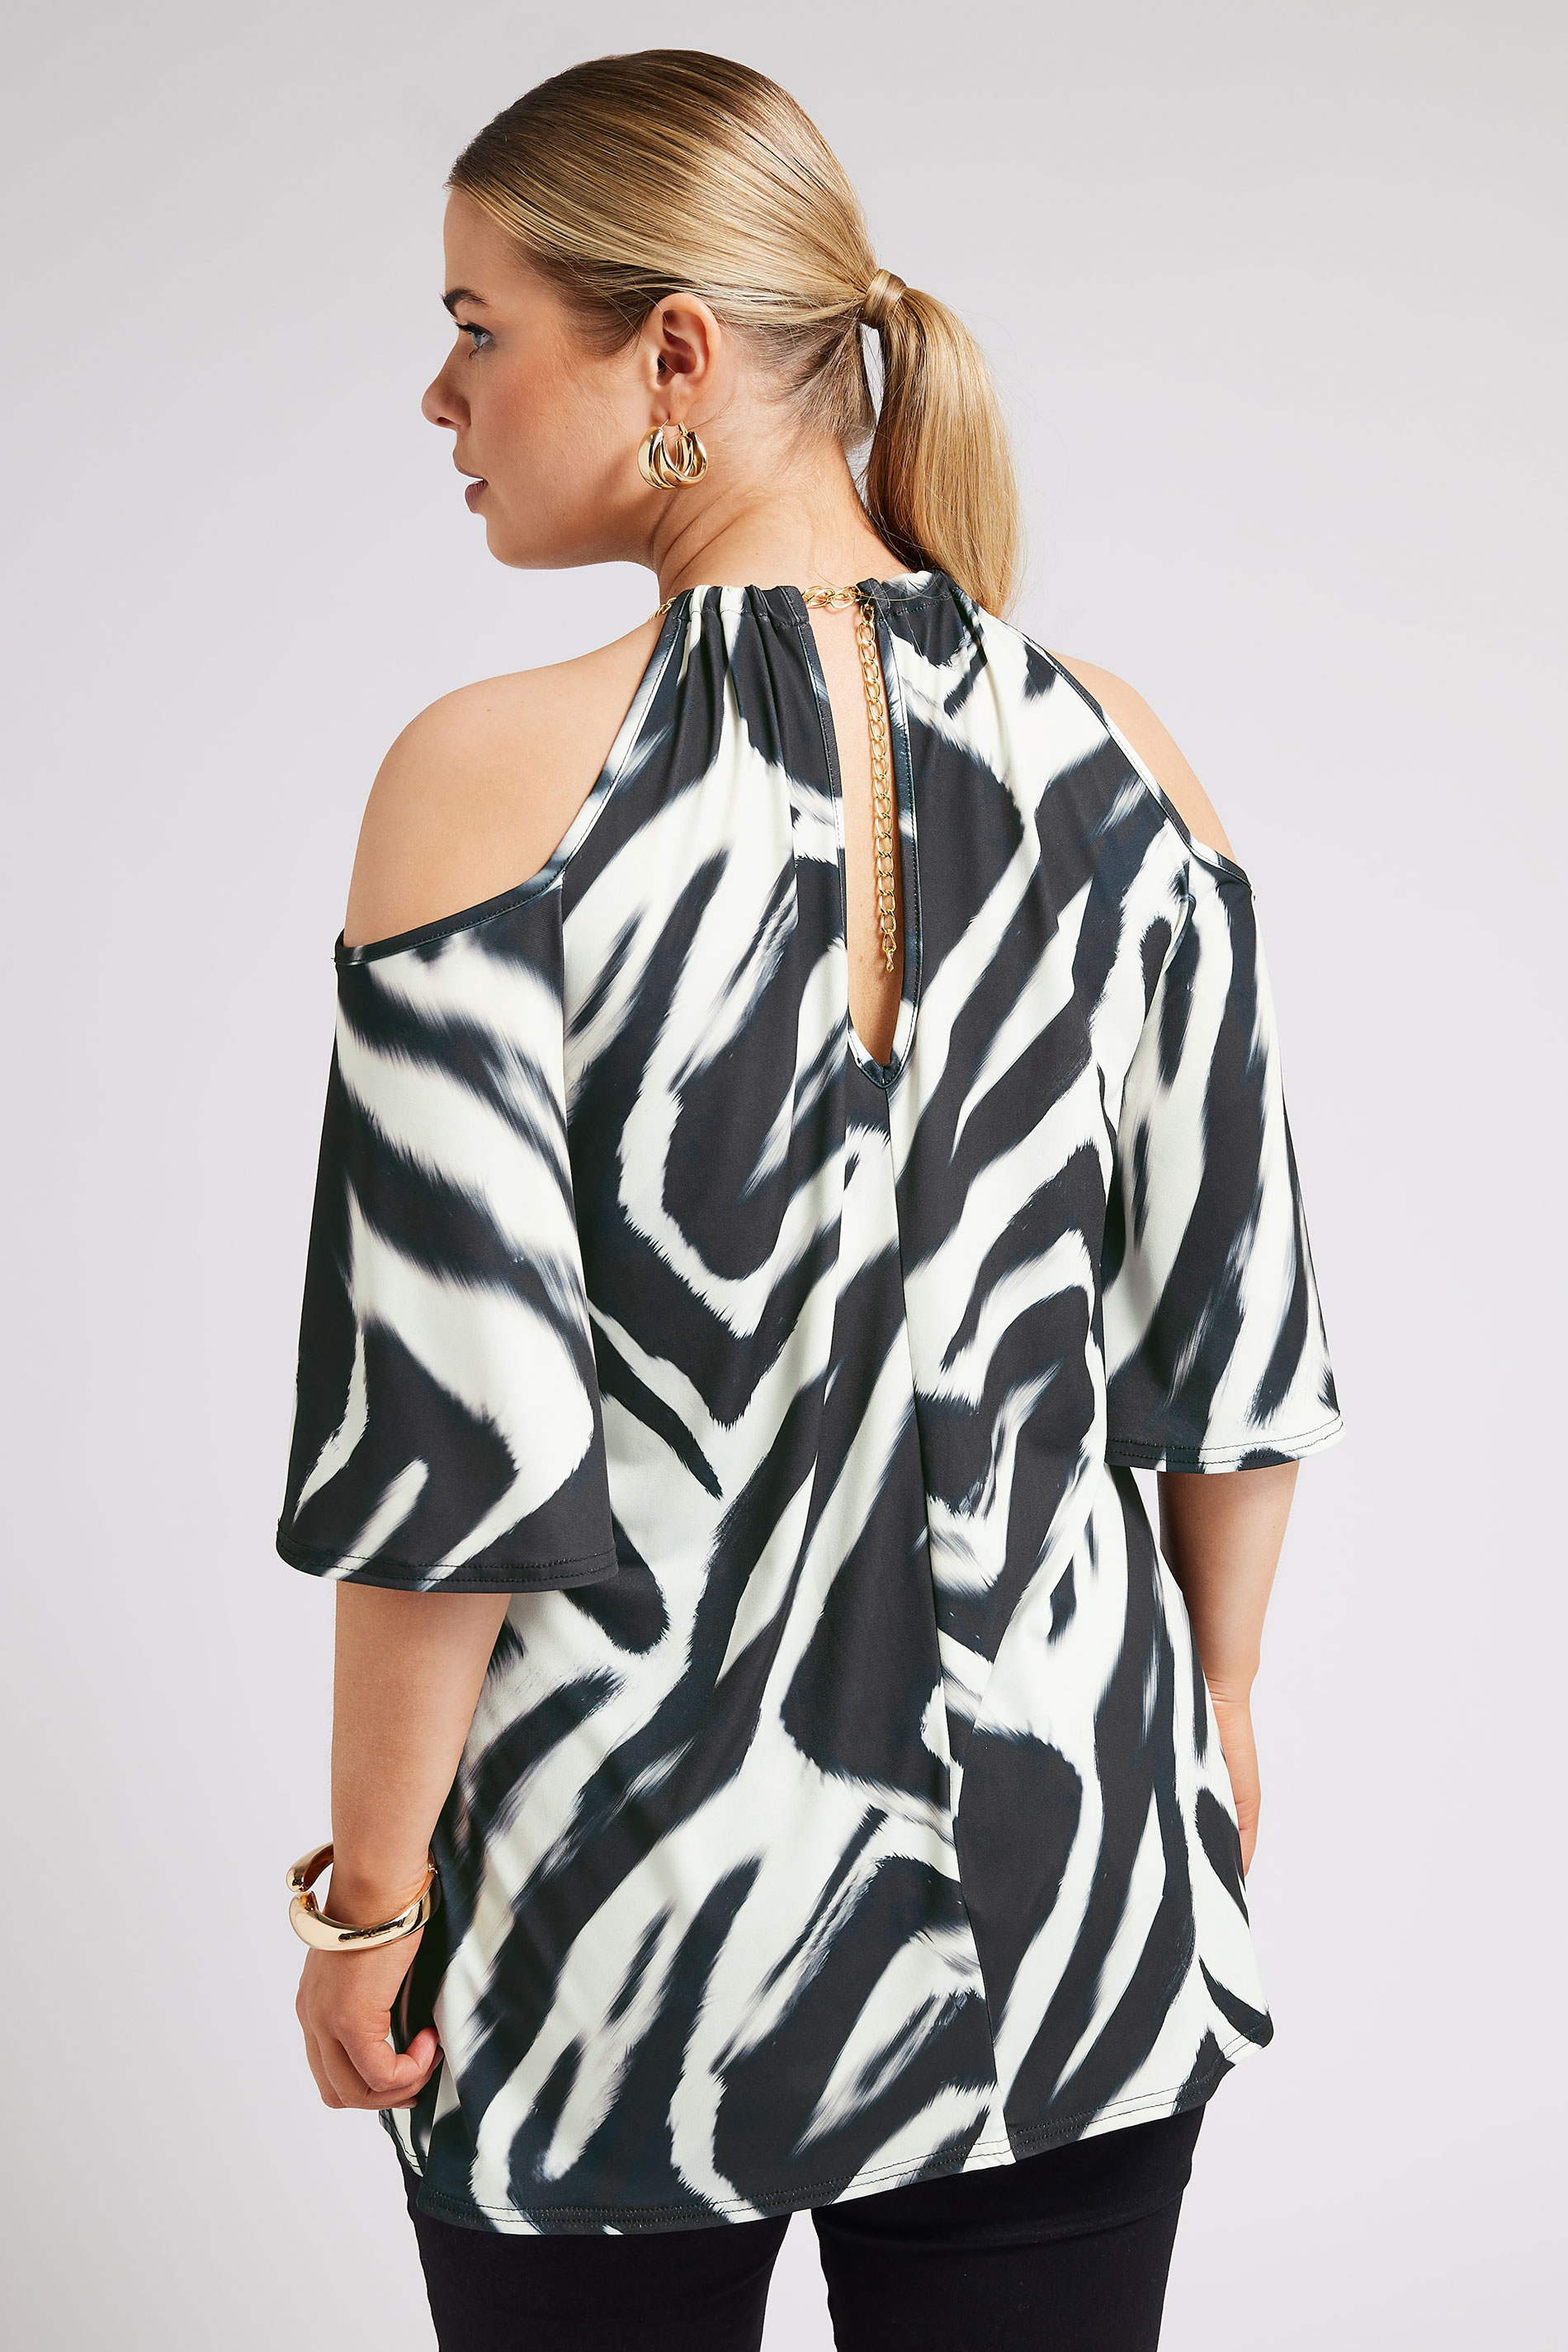 YOURS LONDON Plus Size Black Zebra Print Cold Shoulder Top | Yours Clothing 3